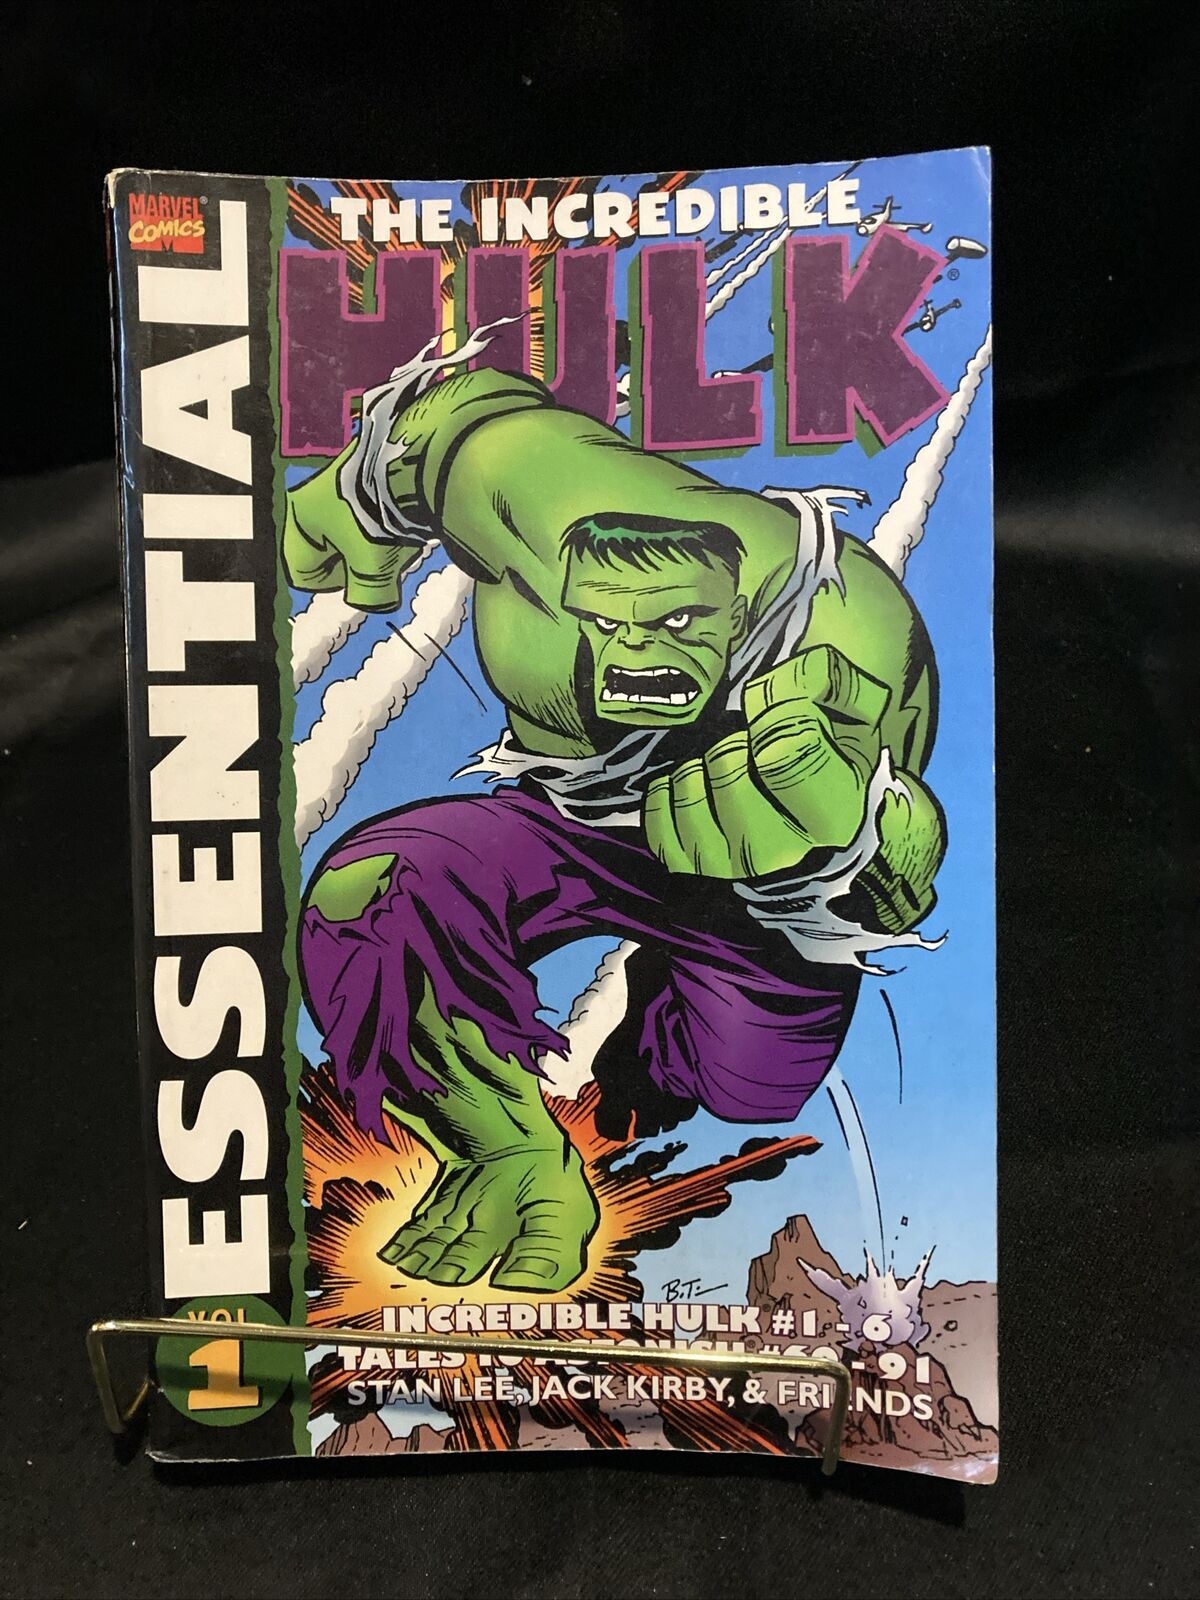 Essential Hulk #1 (Marvel Comics April 2003)